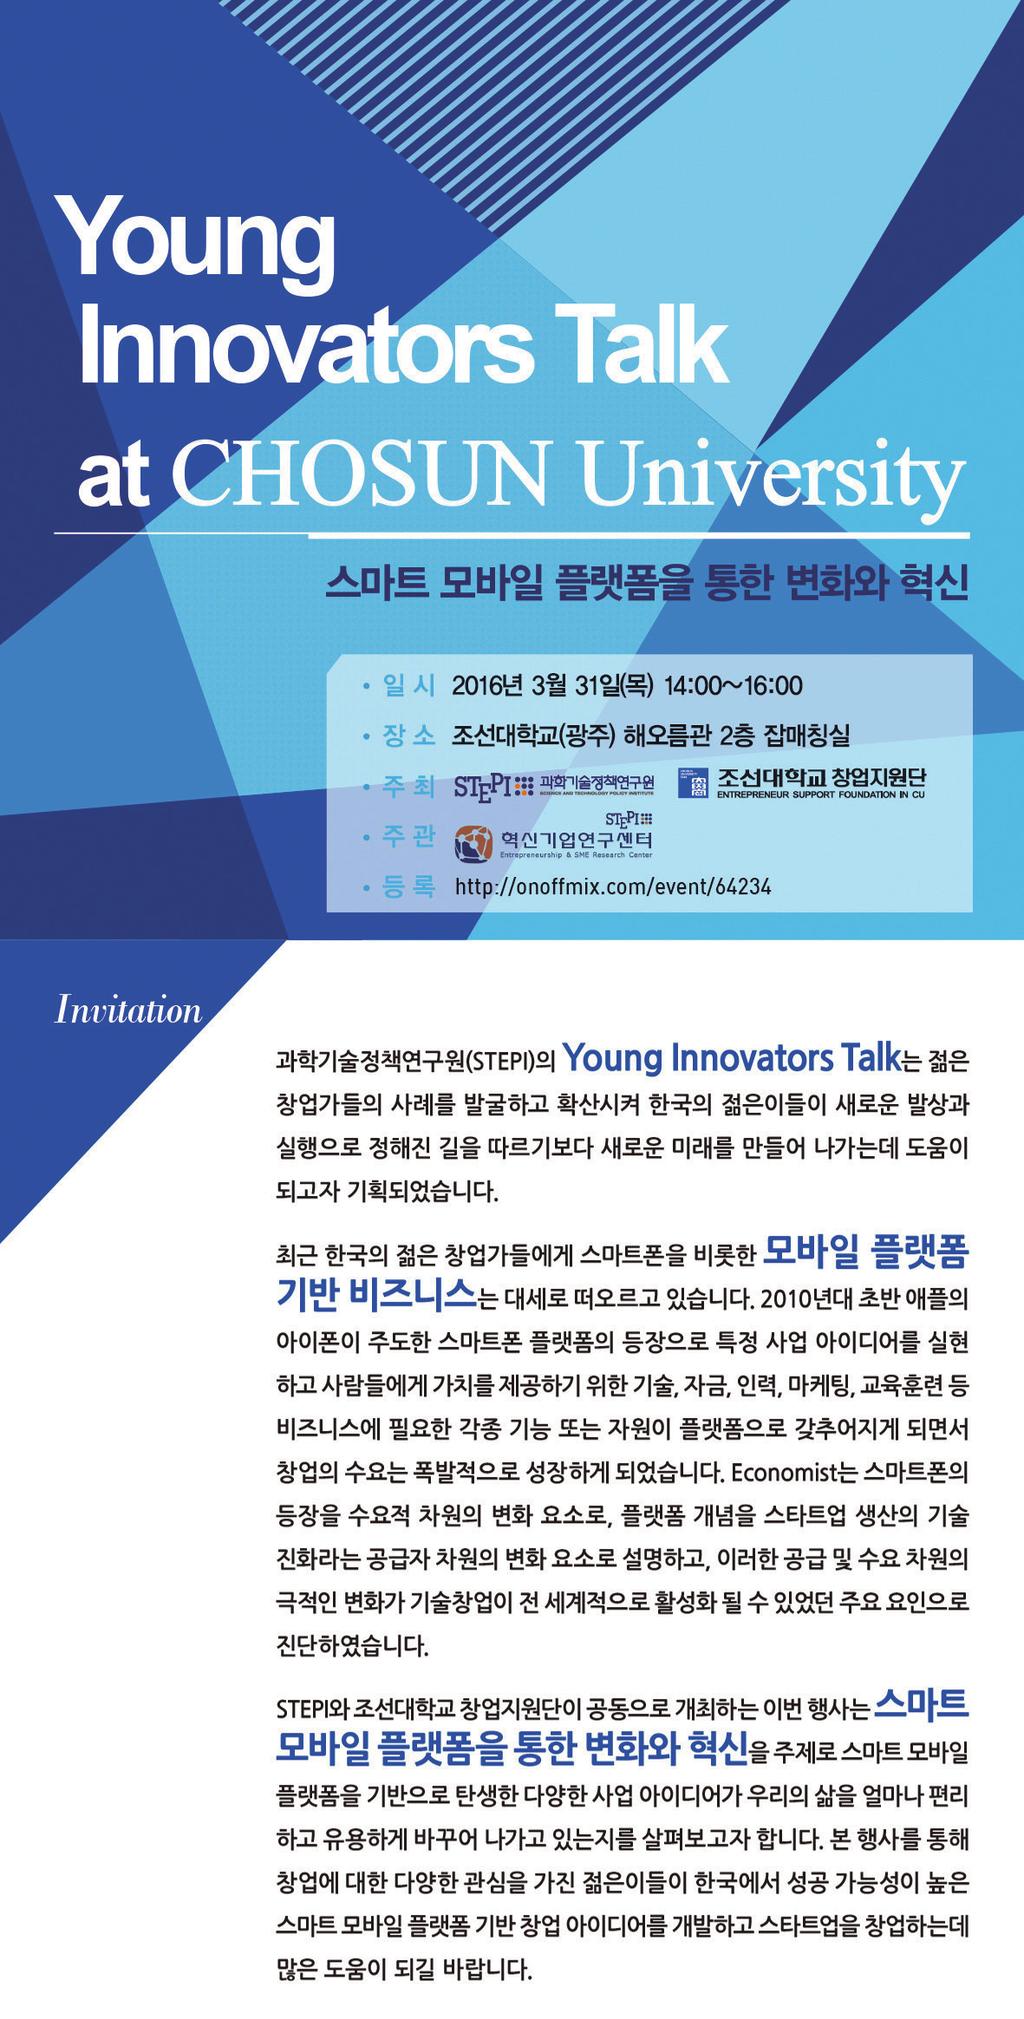 Young Innovators Talk 과학기술정책연구원에서는 2013년 말부터 Young Innovators Talk 행사를 통해 Young Innovators의 혁신적 사고와 창조 적 사업 모델을 투자자,